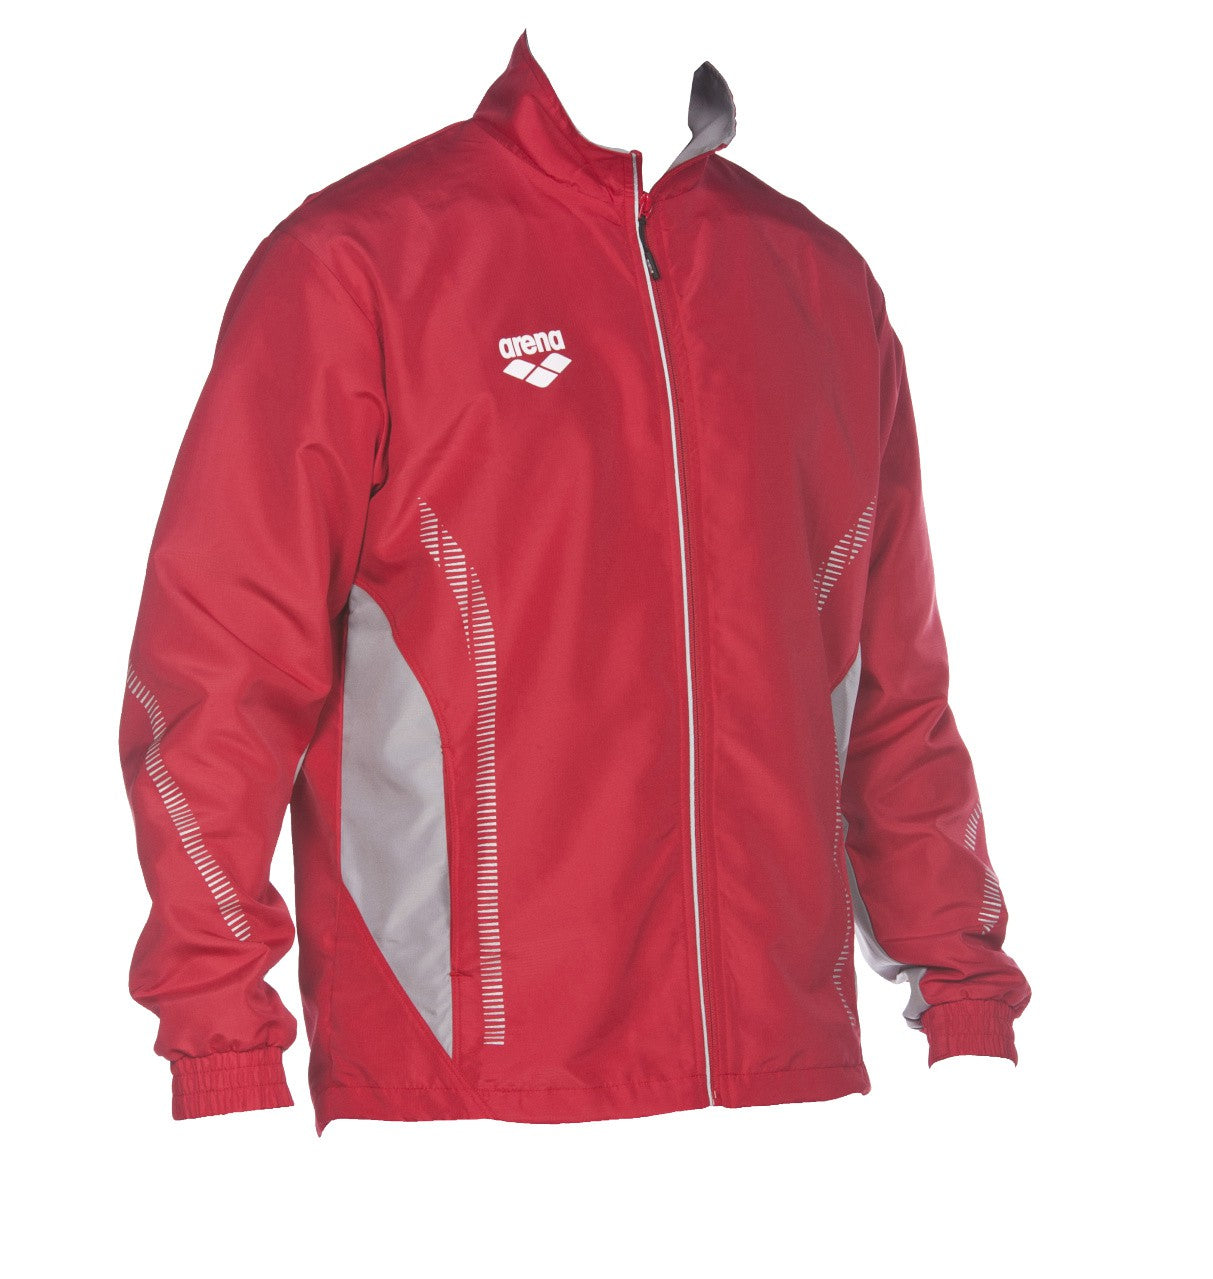 Tl Warm Up Jacket red/grey